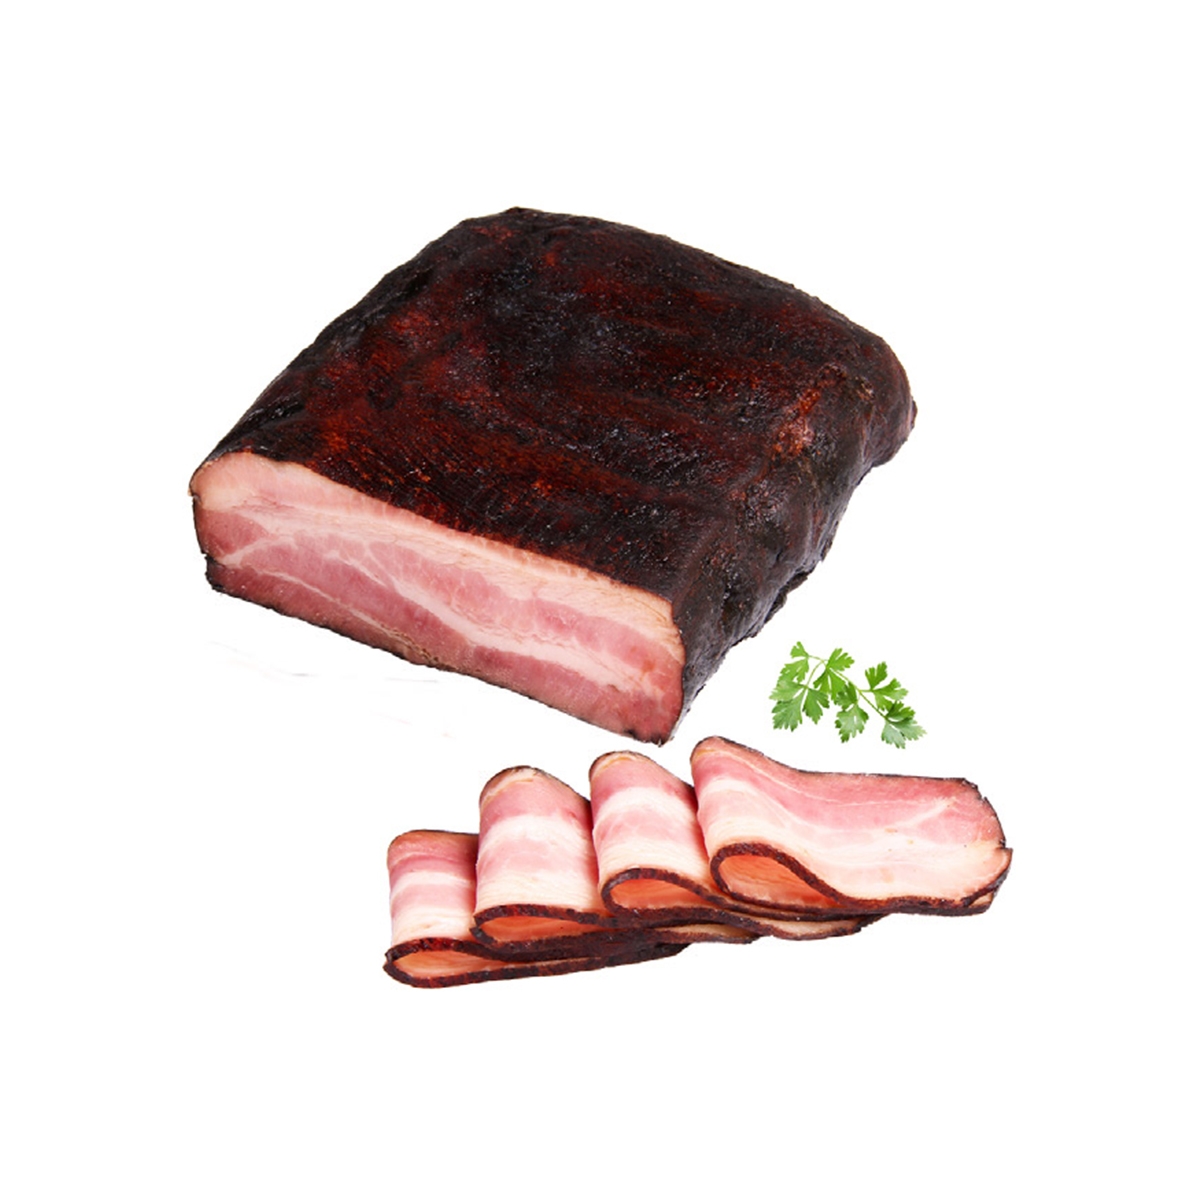 Anglická slanina Premium Prantl 100 g